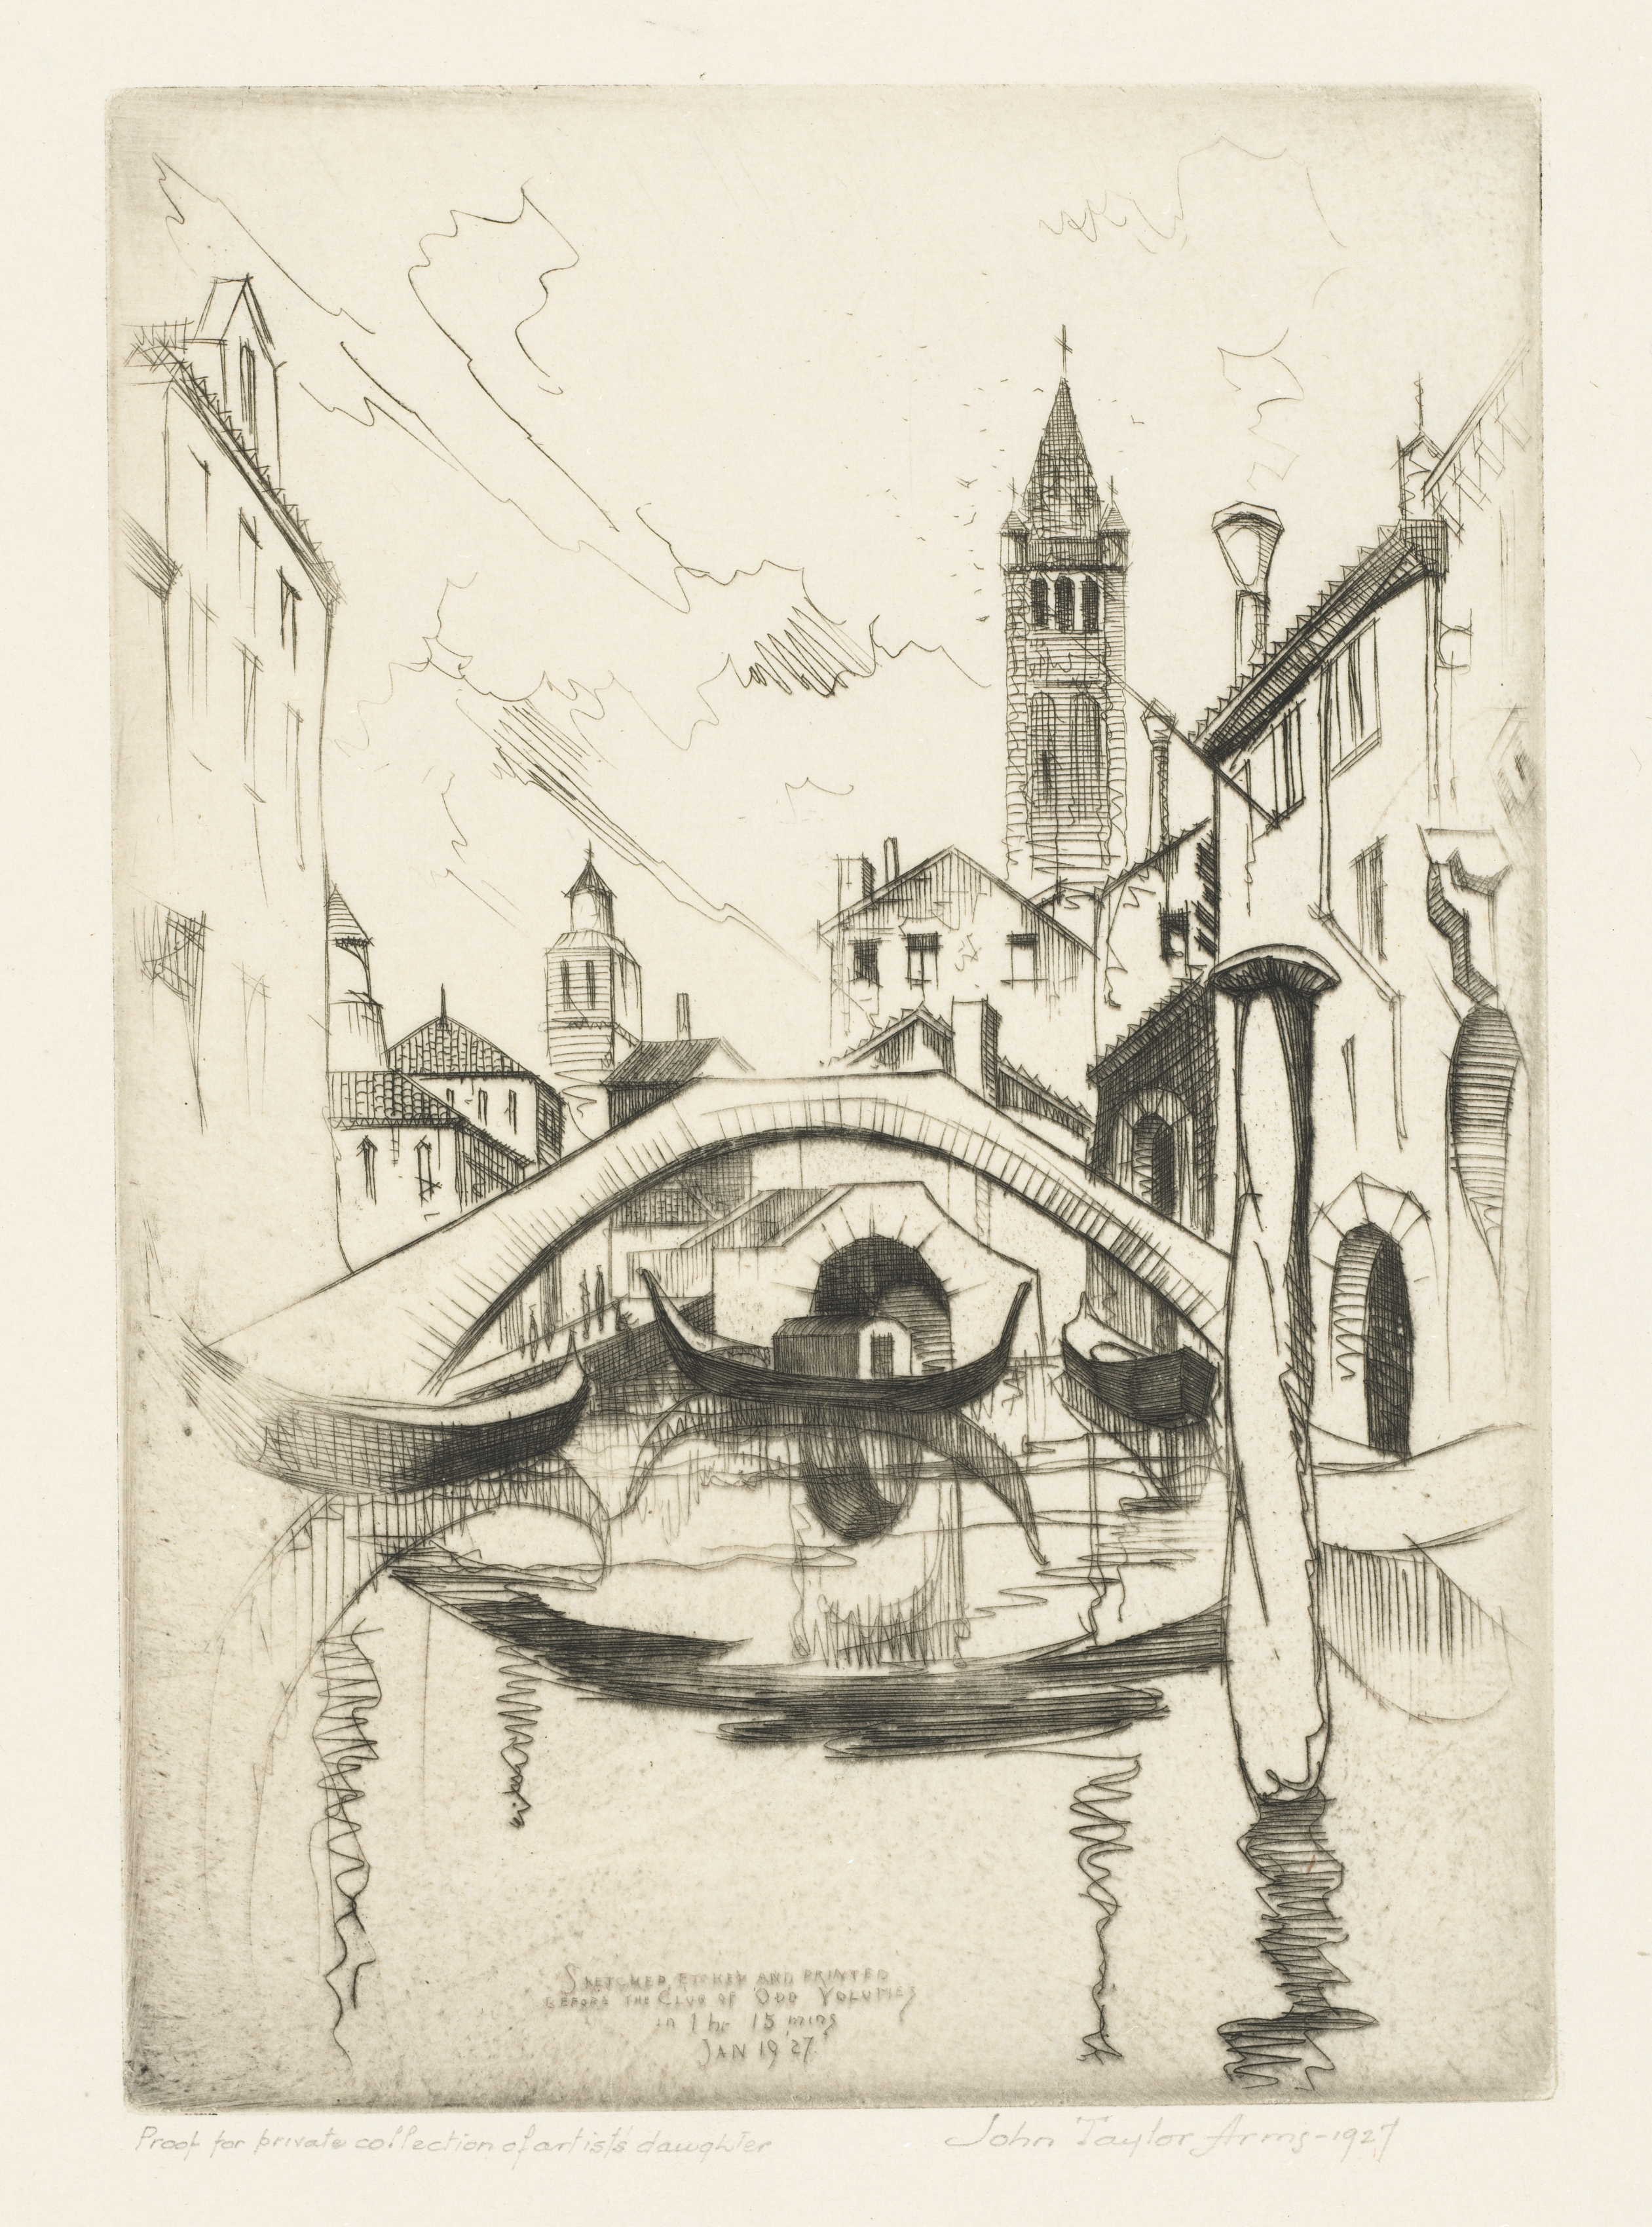 Demonstration Series No. 17: Venice (Sketch)